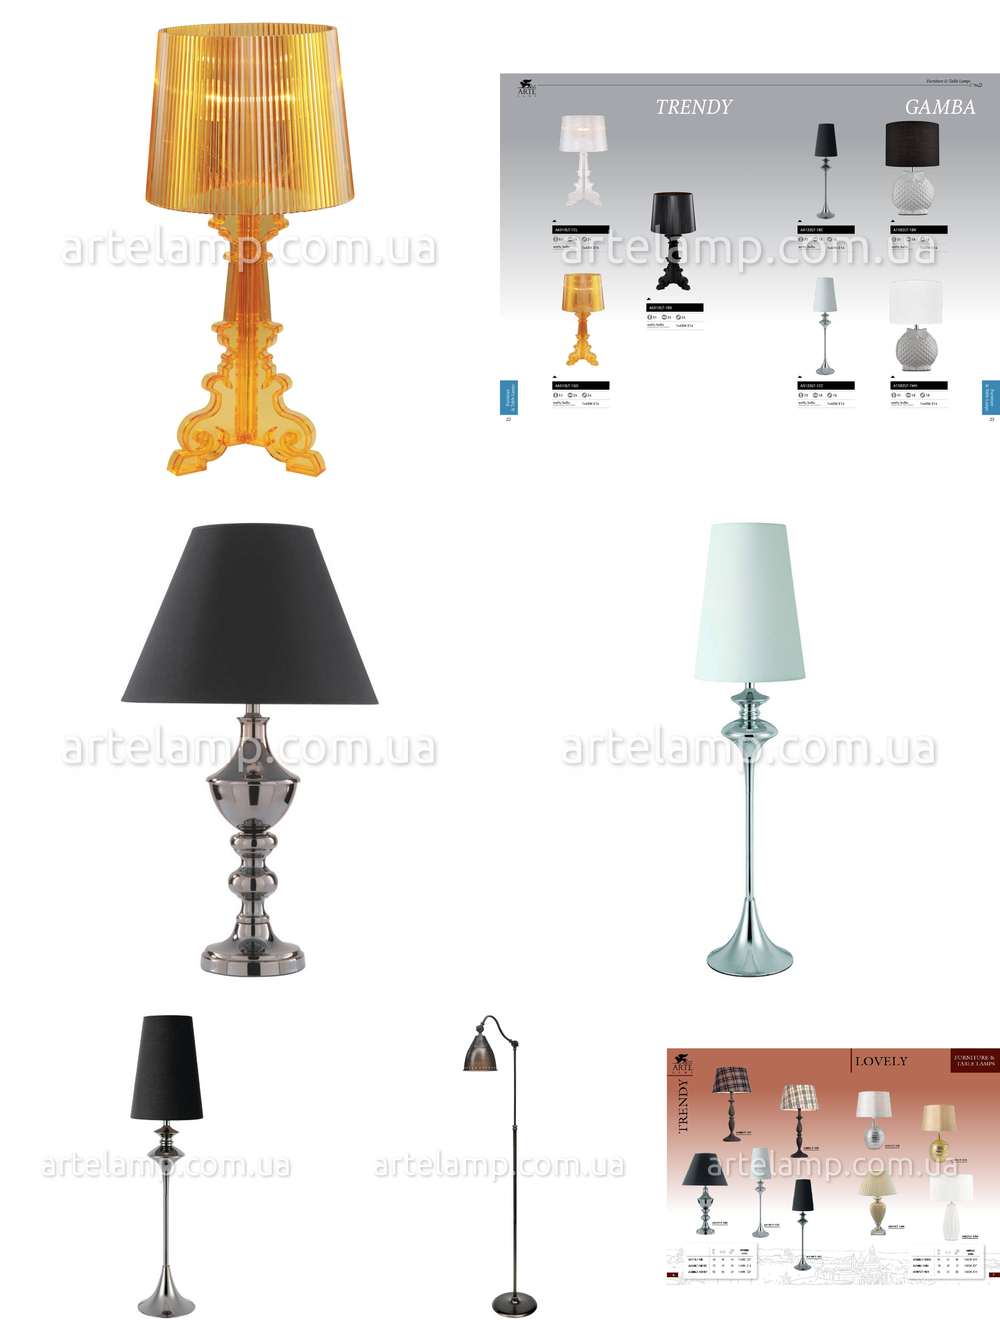 «». Arte Lamp серия Trendy артикул A6010LT-1CL